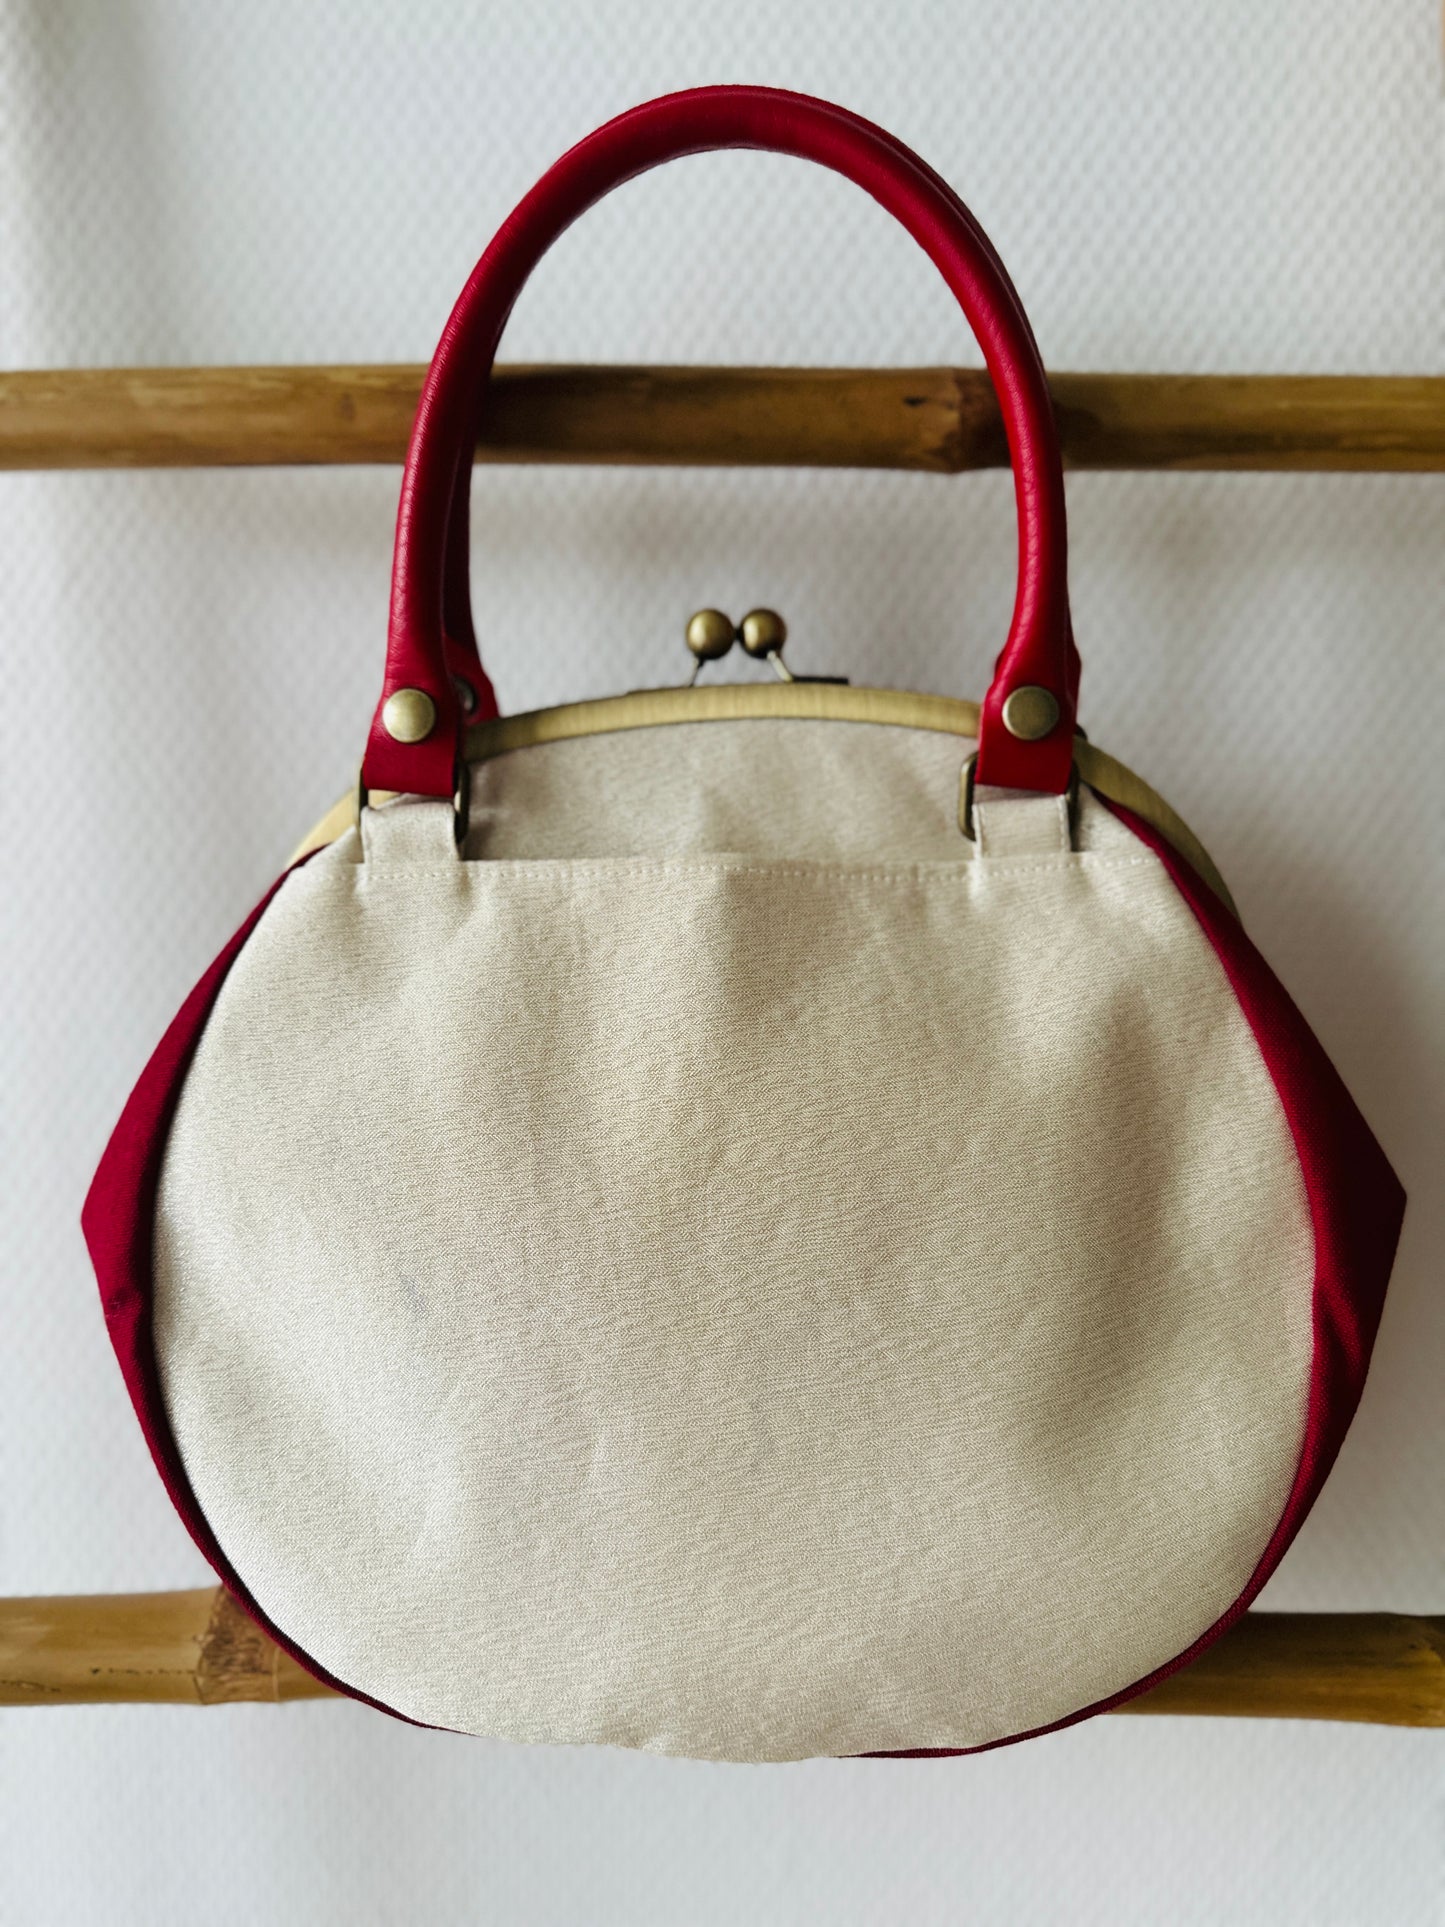 【Rot/Kamelie】 Gamaguchi-en/Handtasche, Kupplung, Beutel, japanische Tasche, Umhängetasche, japanische Geschenke